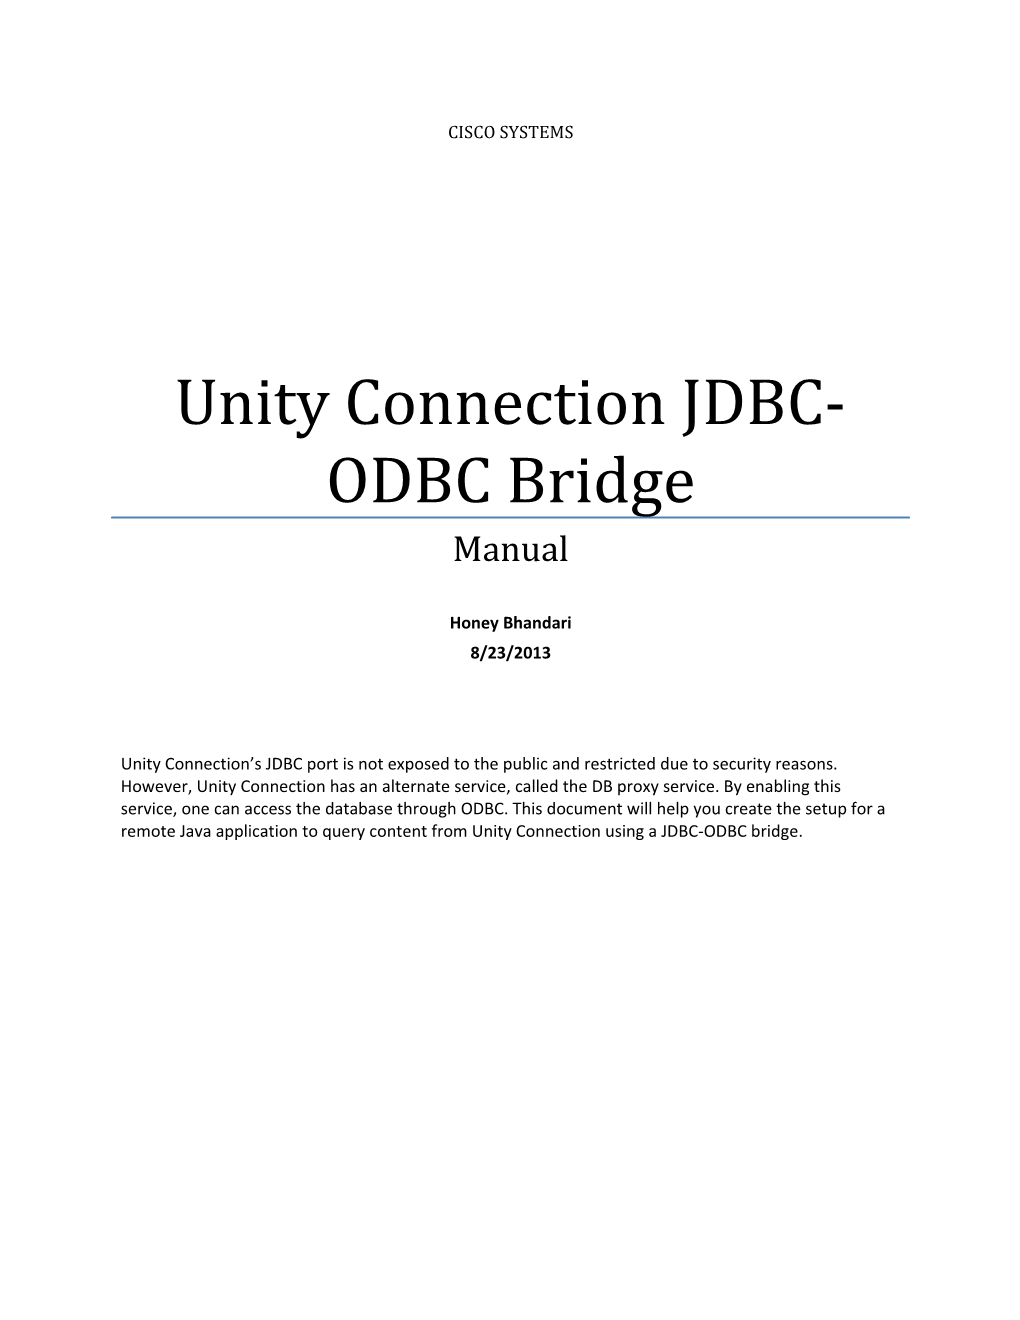 Unity Connection JDBC-ODBC Bridge